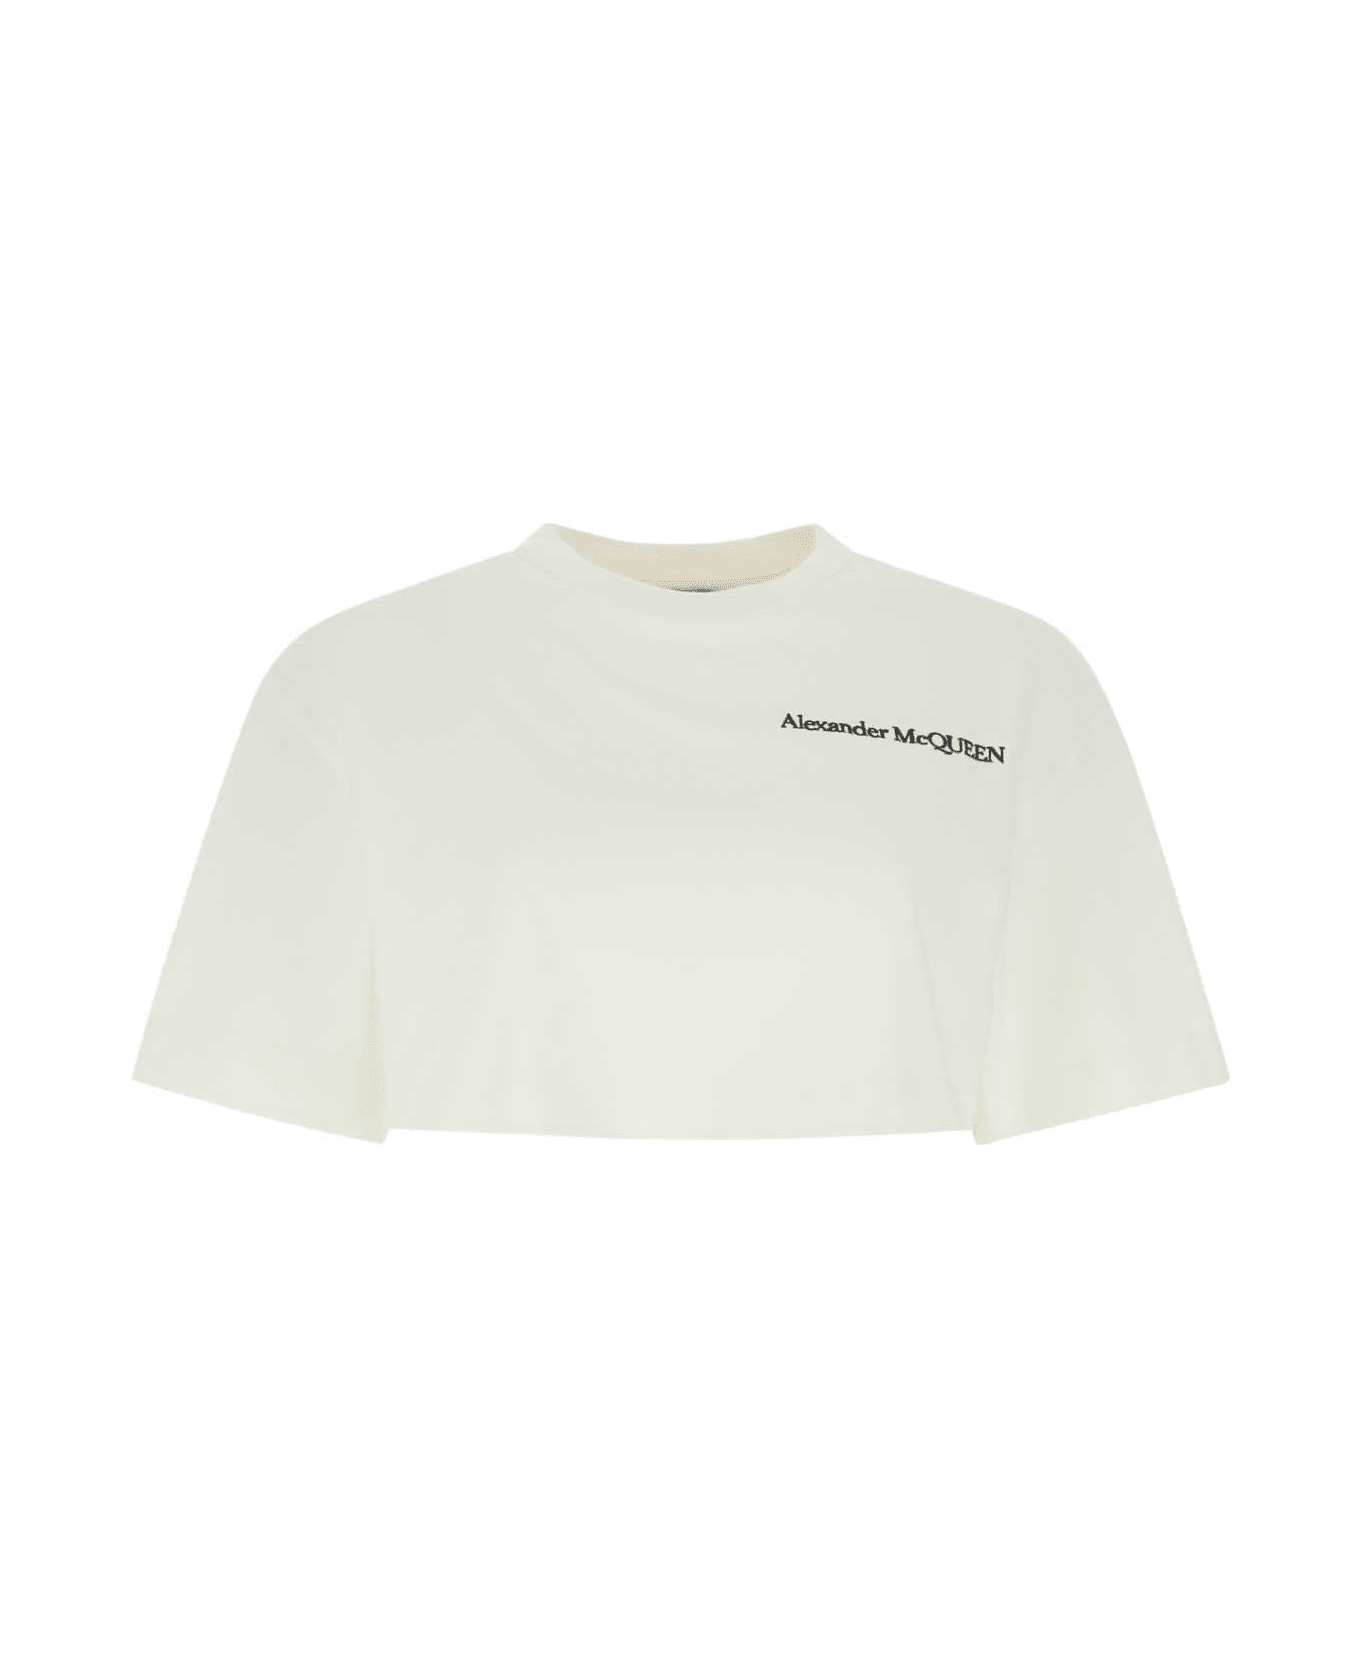 Alexander McQueen White Cotton T-shirt - 0900 Tシャツ